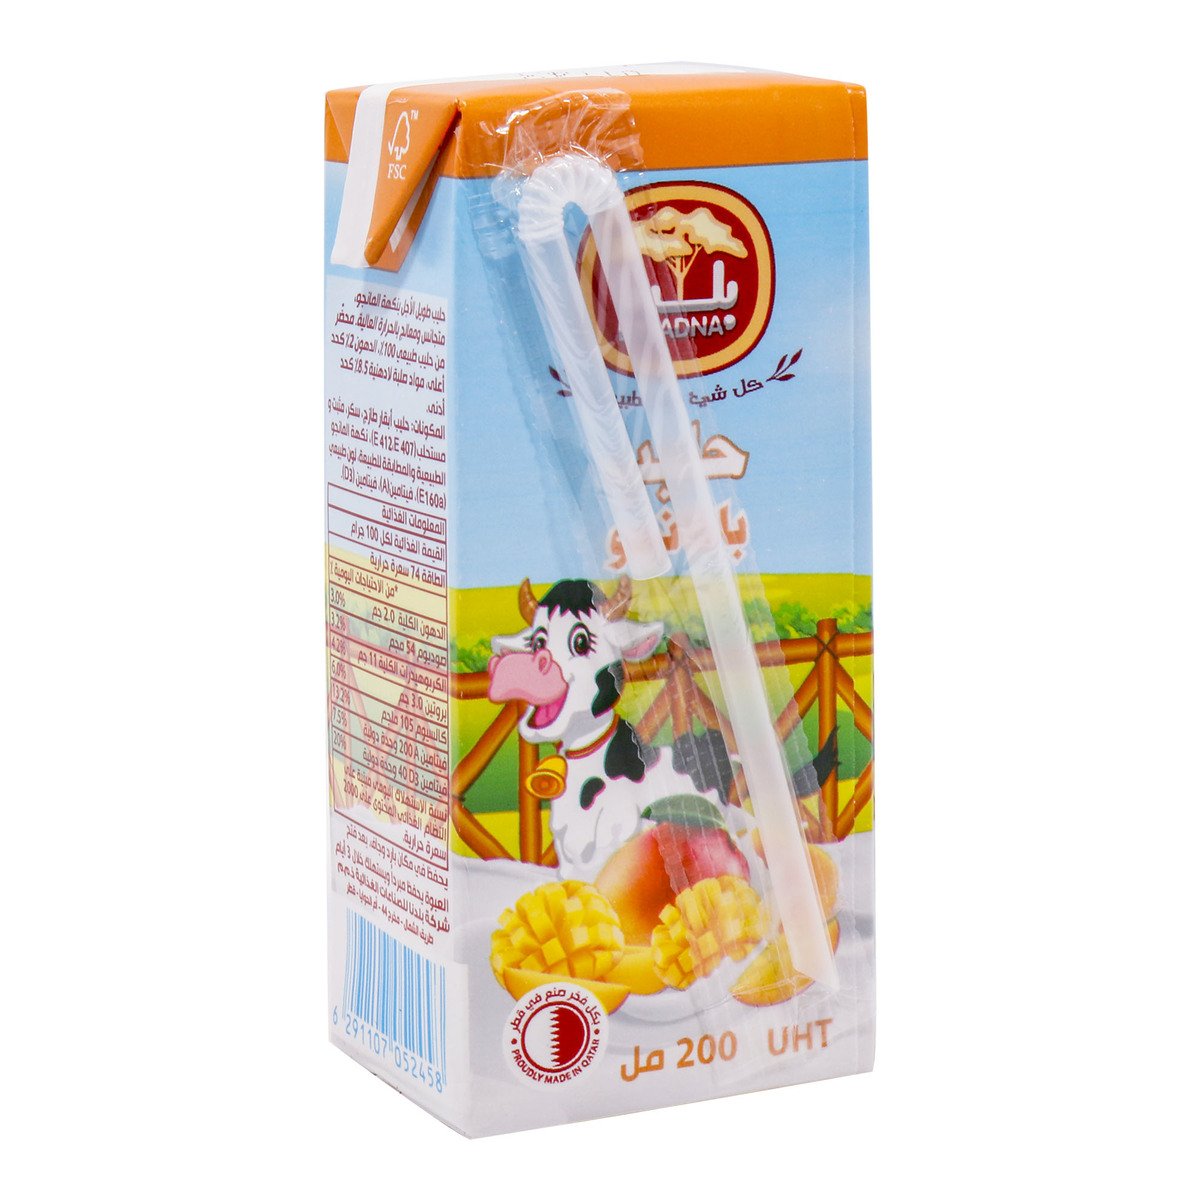 Baladna UHT Flavoured Milk Mango 200ml